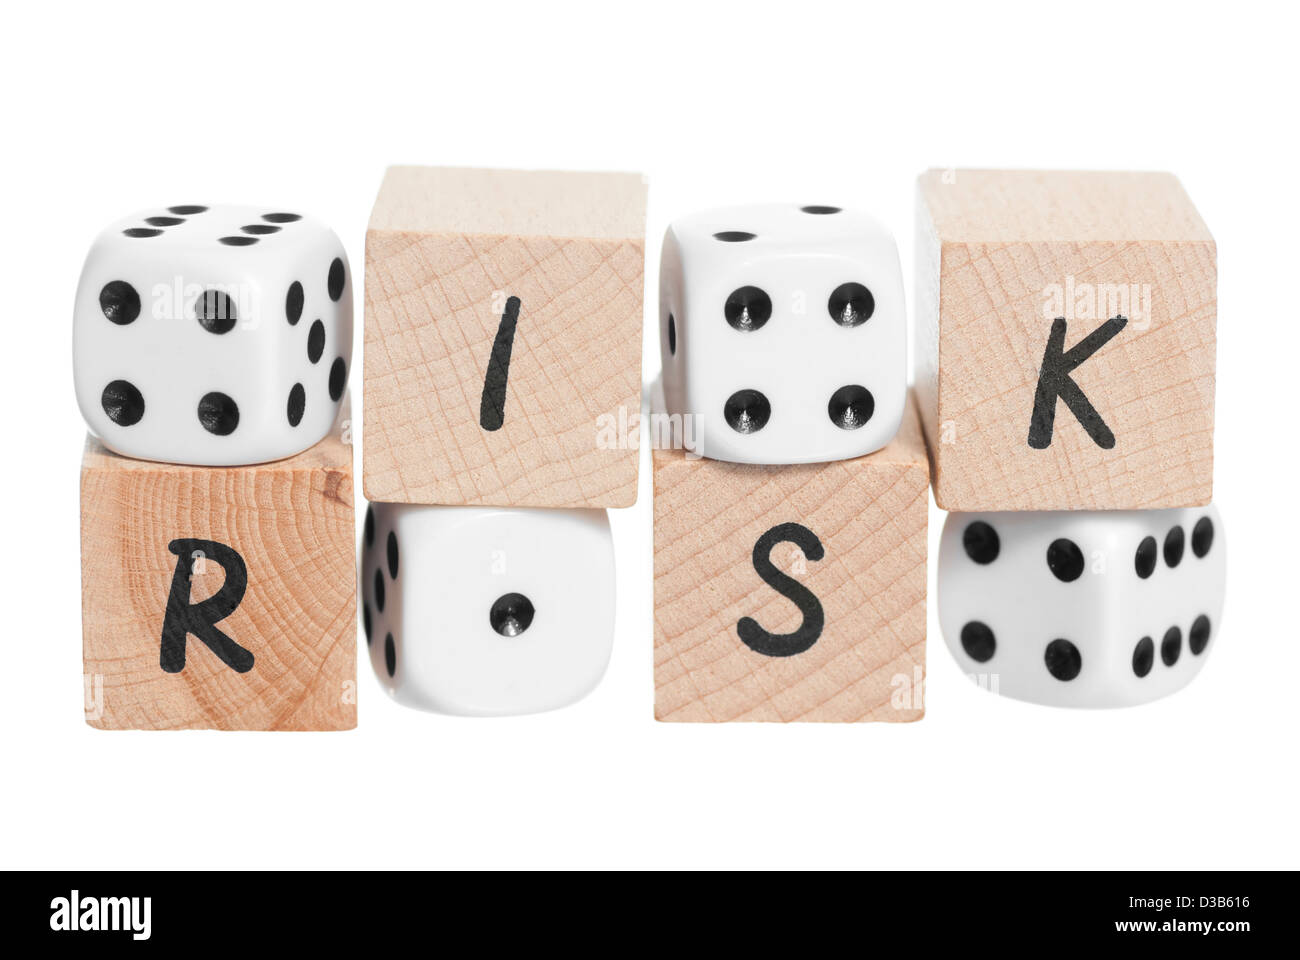 Risk spelt with wooden blocks. White background. Stock Photo